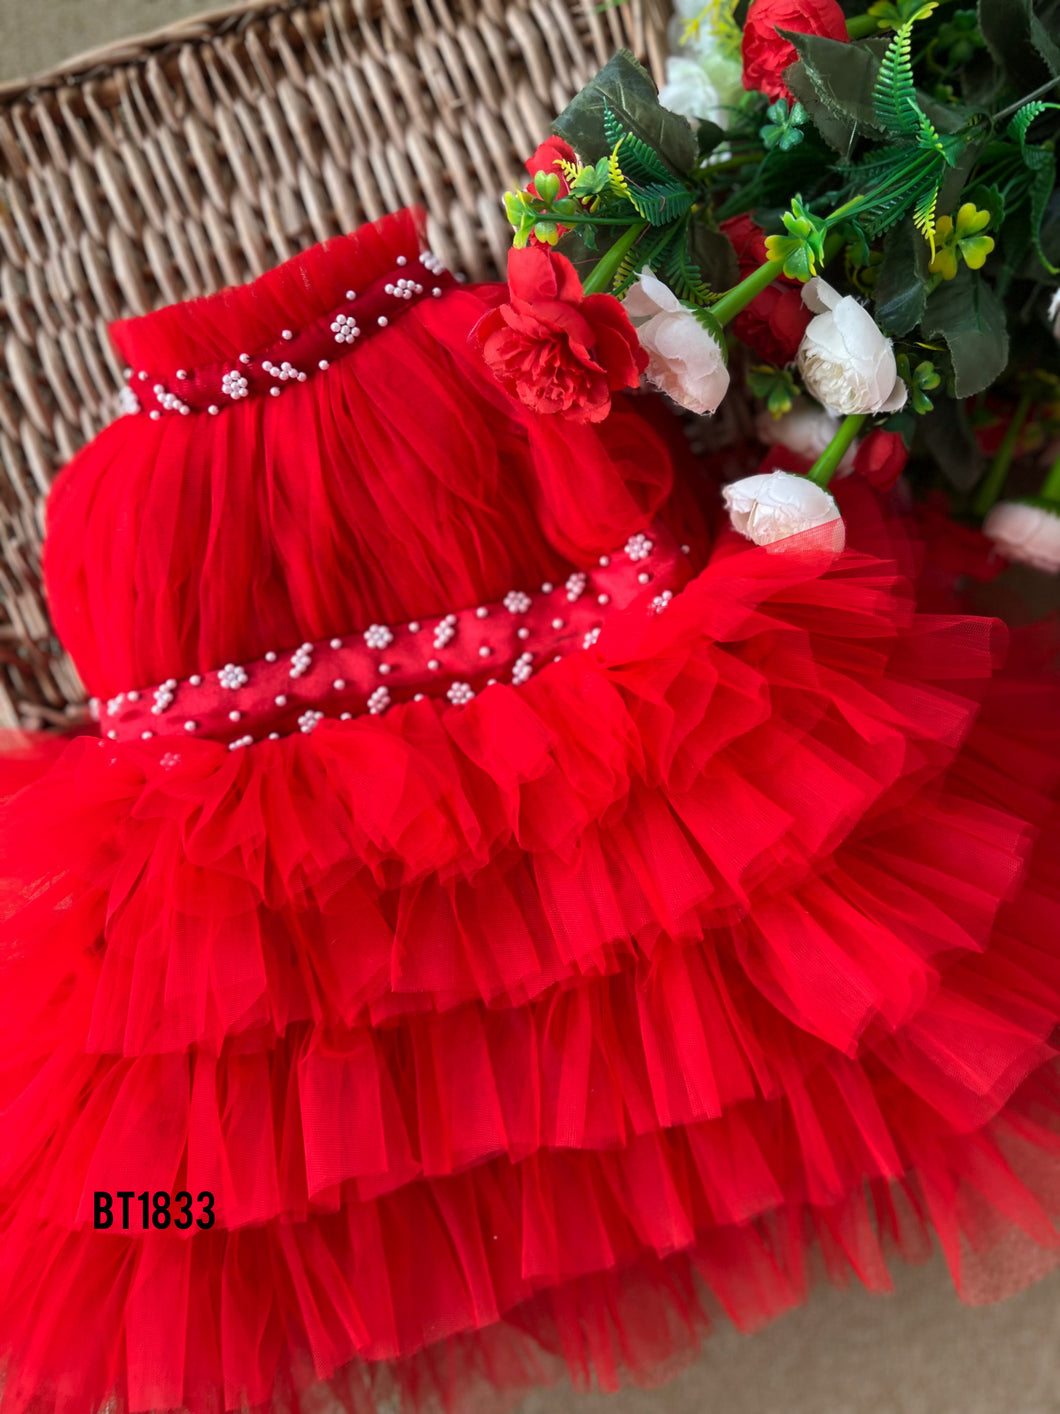 BT1833 Radiant Ruby: Baby's Ruffle Fiesta Dress